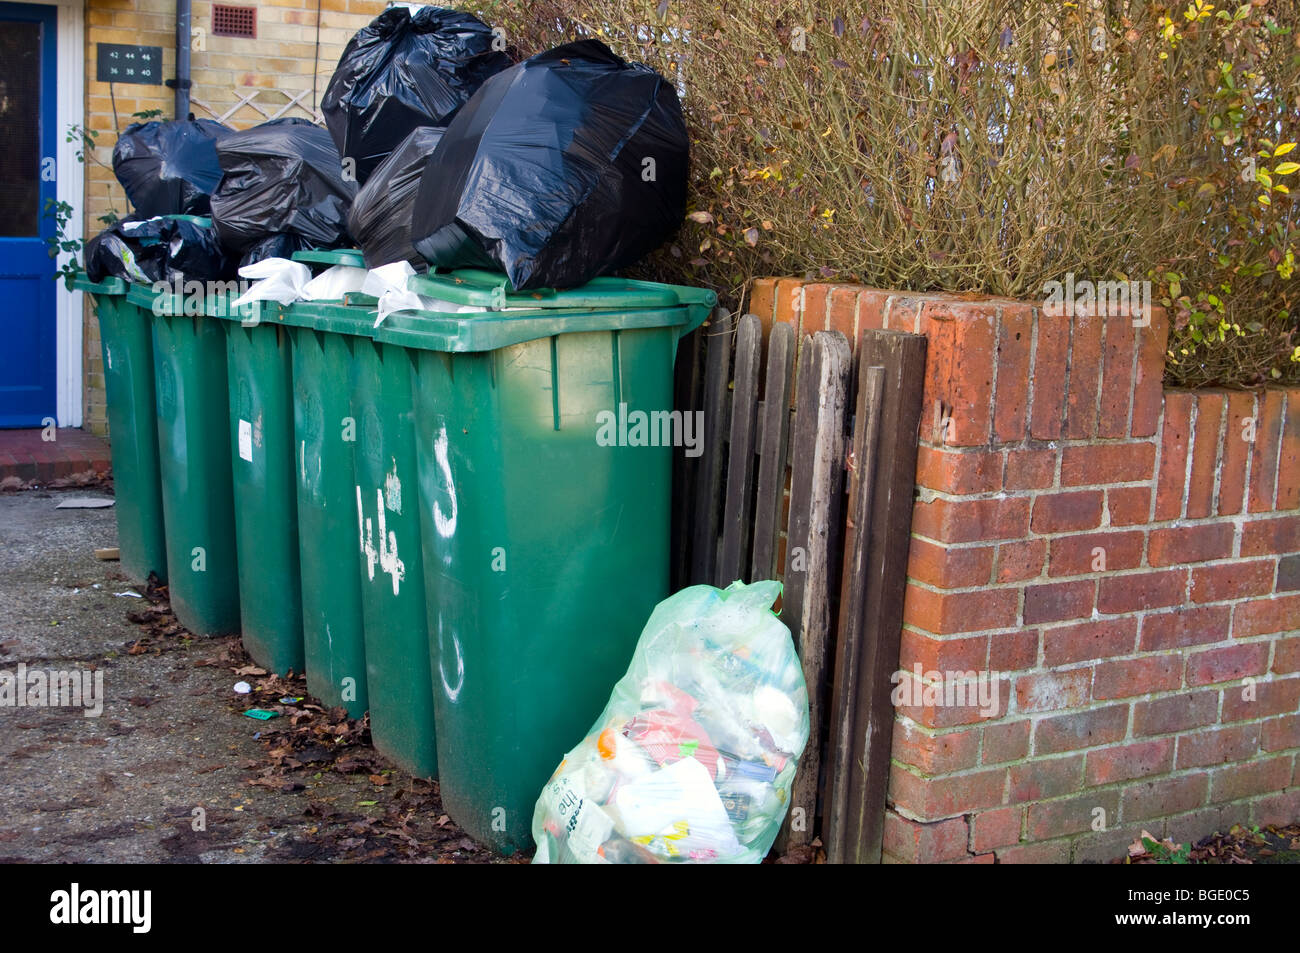 Overflowing Household Waste Bins Stock Photo - Alamy